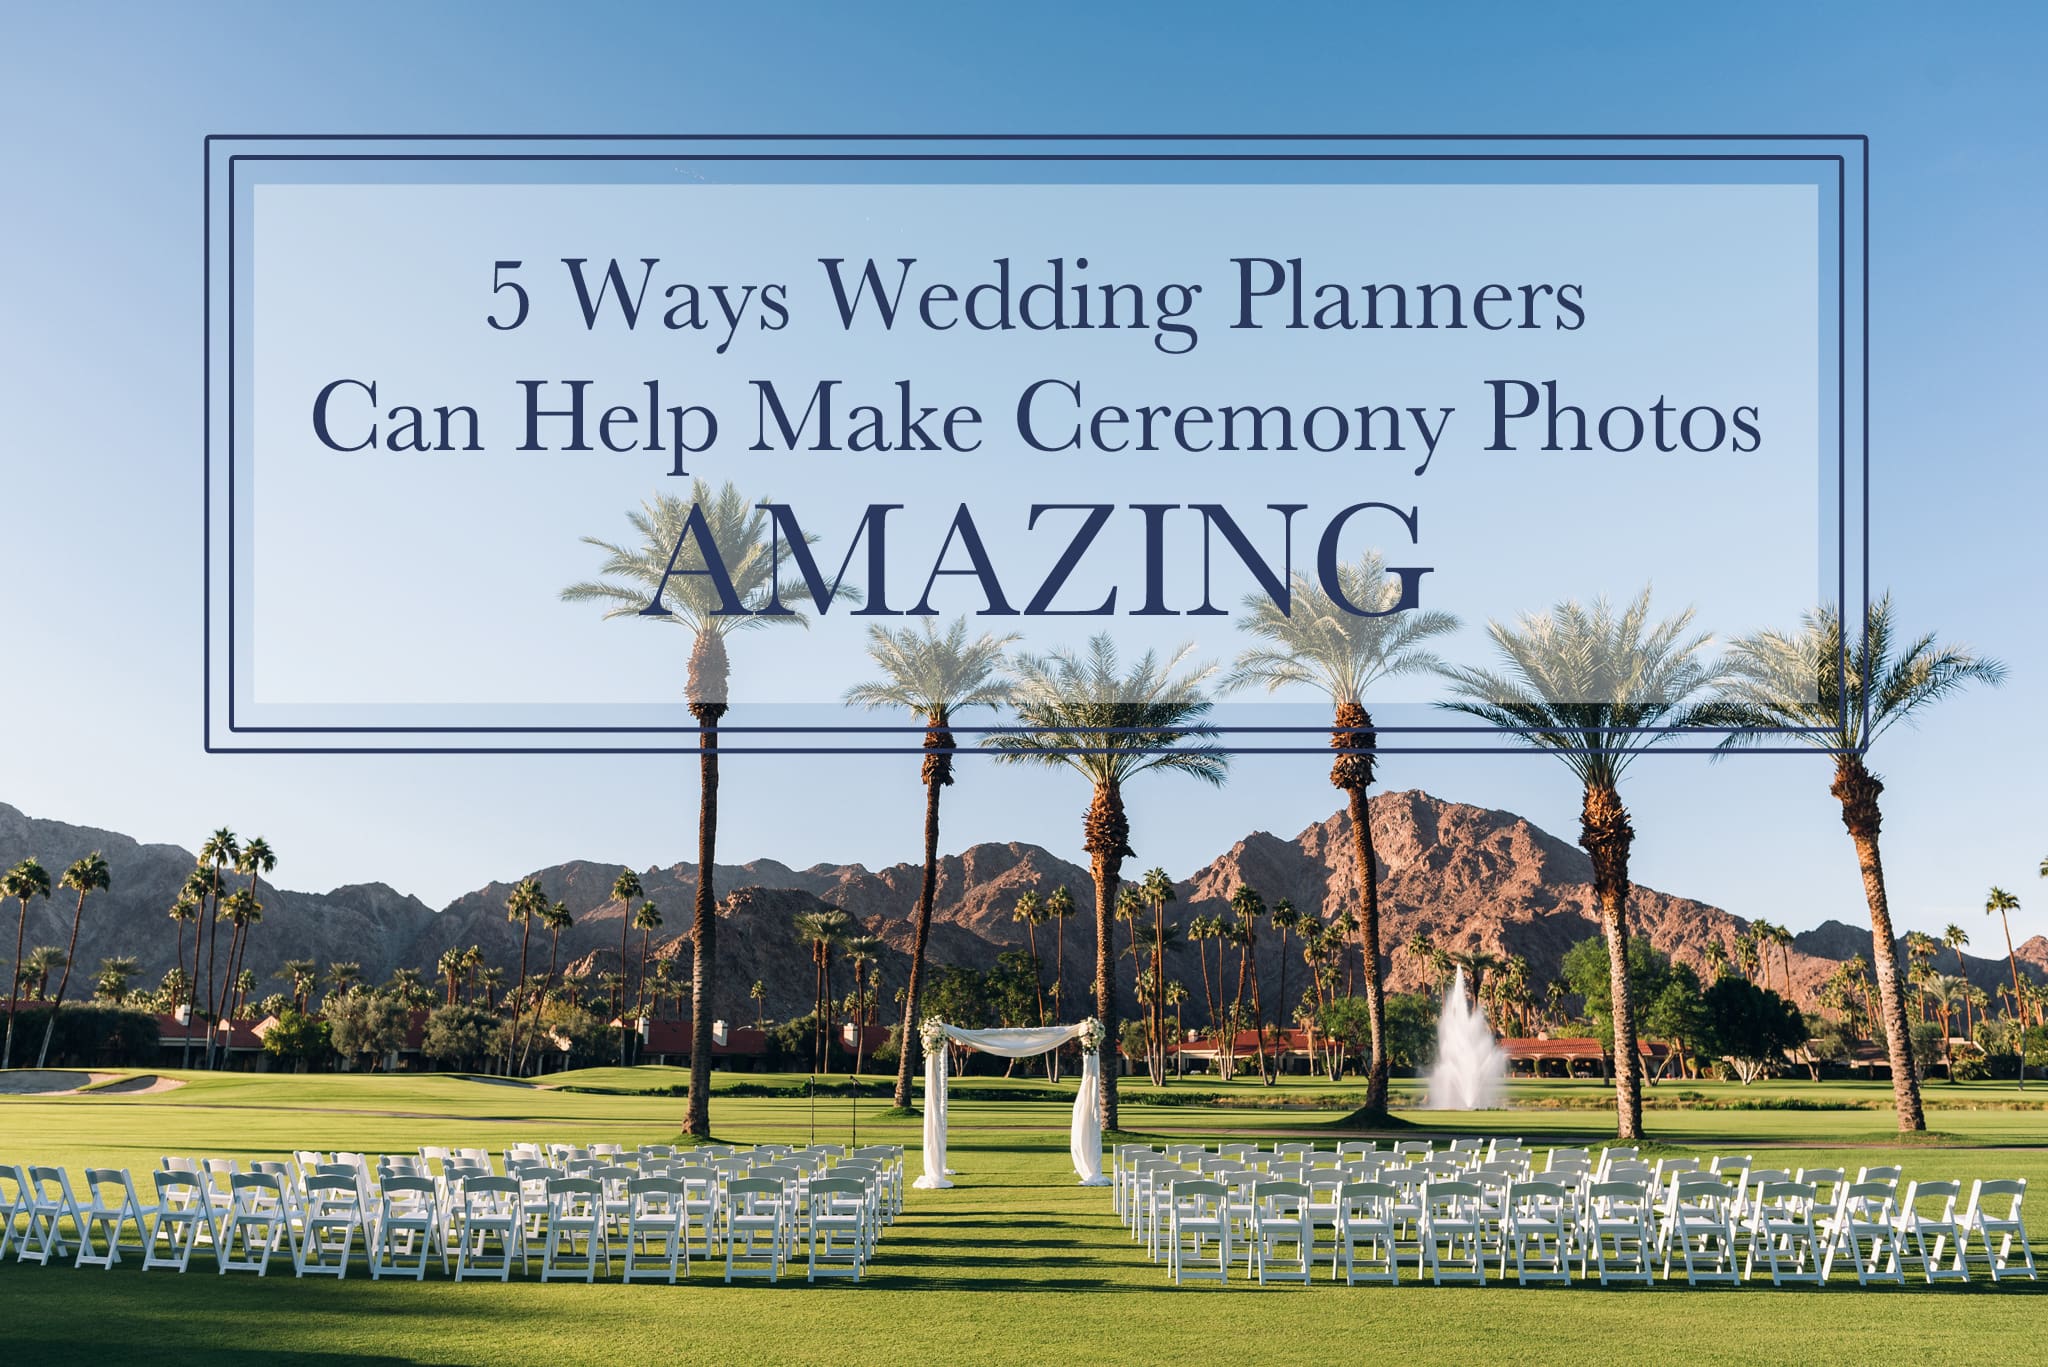 5 Ways Wedding Planners Can Help Make Ceremony Photos Amazing